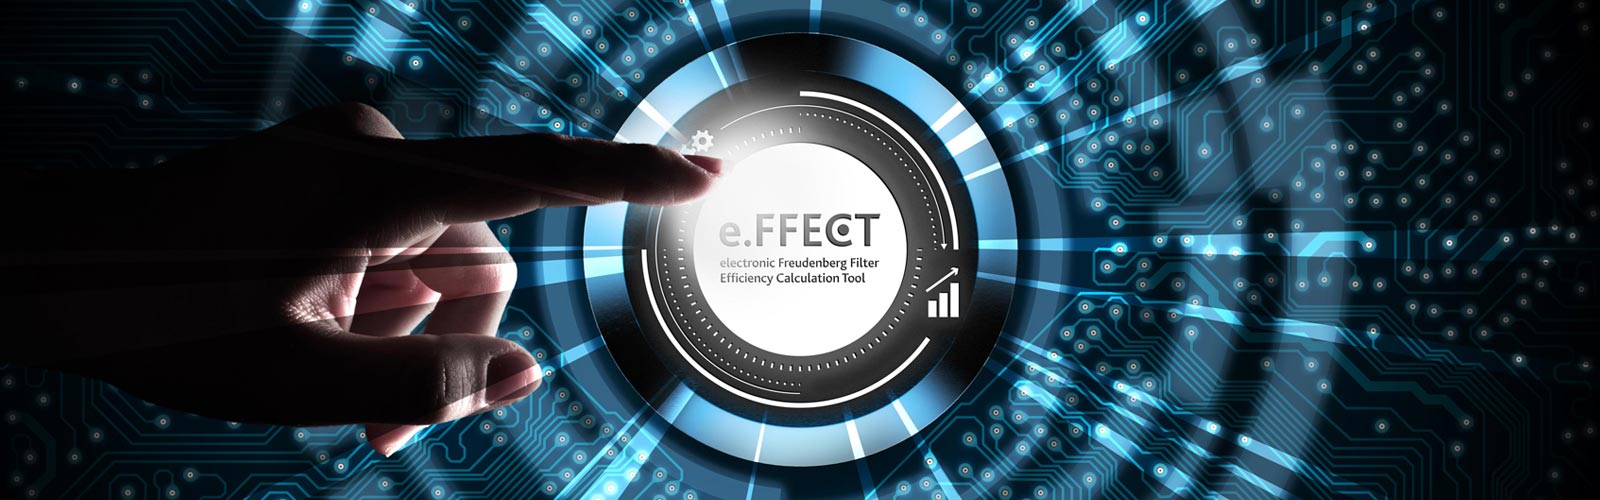 e.FFECT calculation software